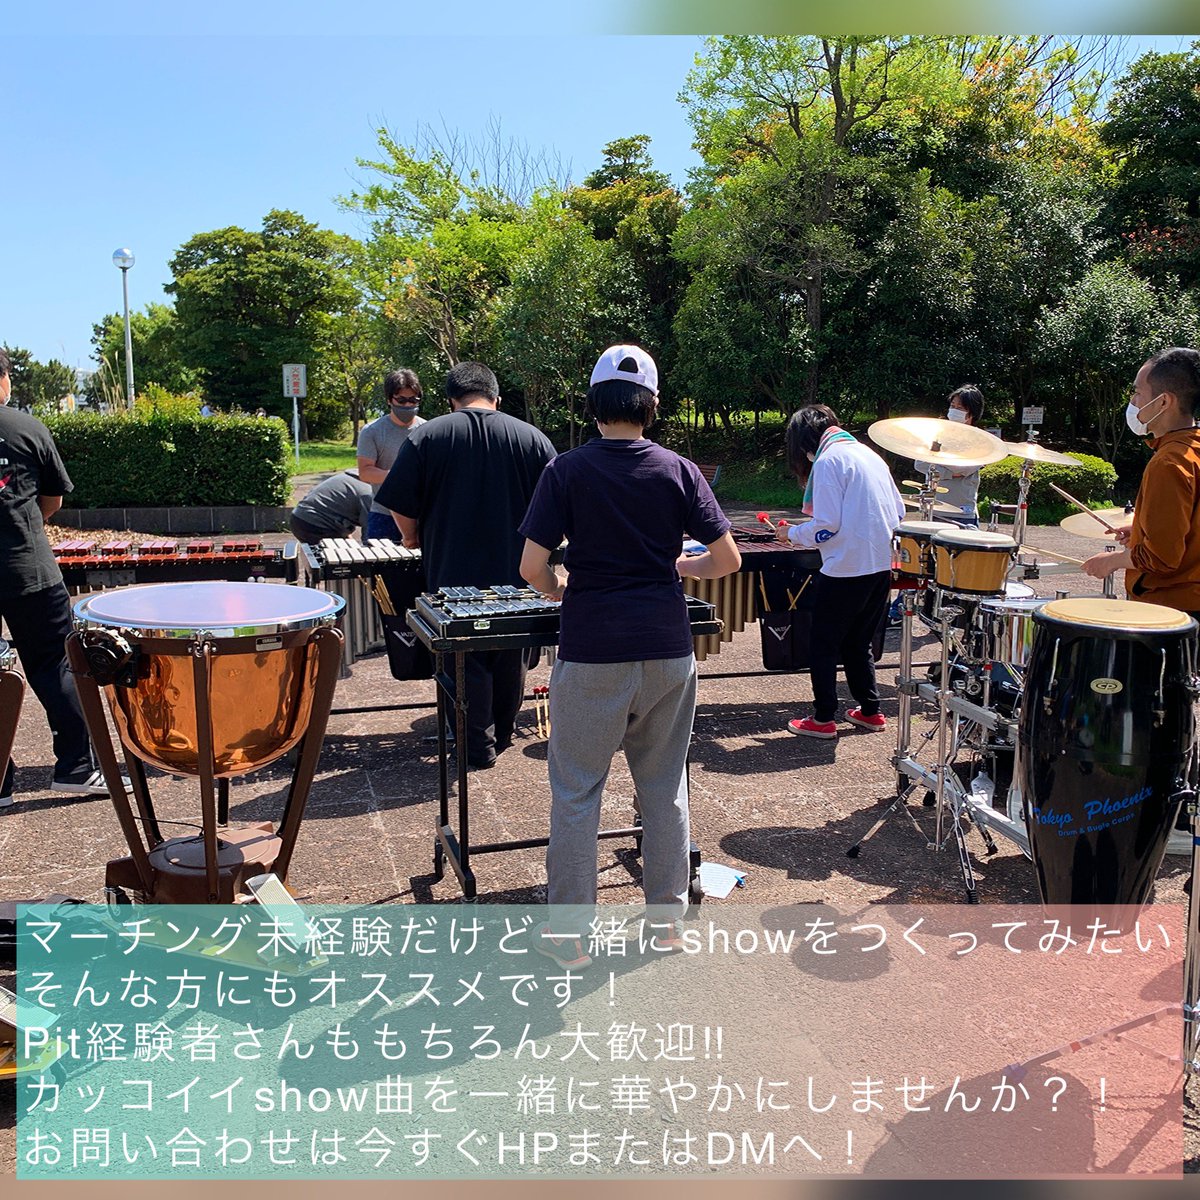 Tokyo Phoenix Drum Bugle Corps Tp 1985 Twitter